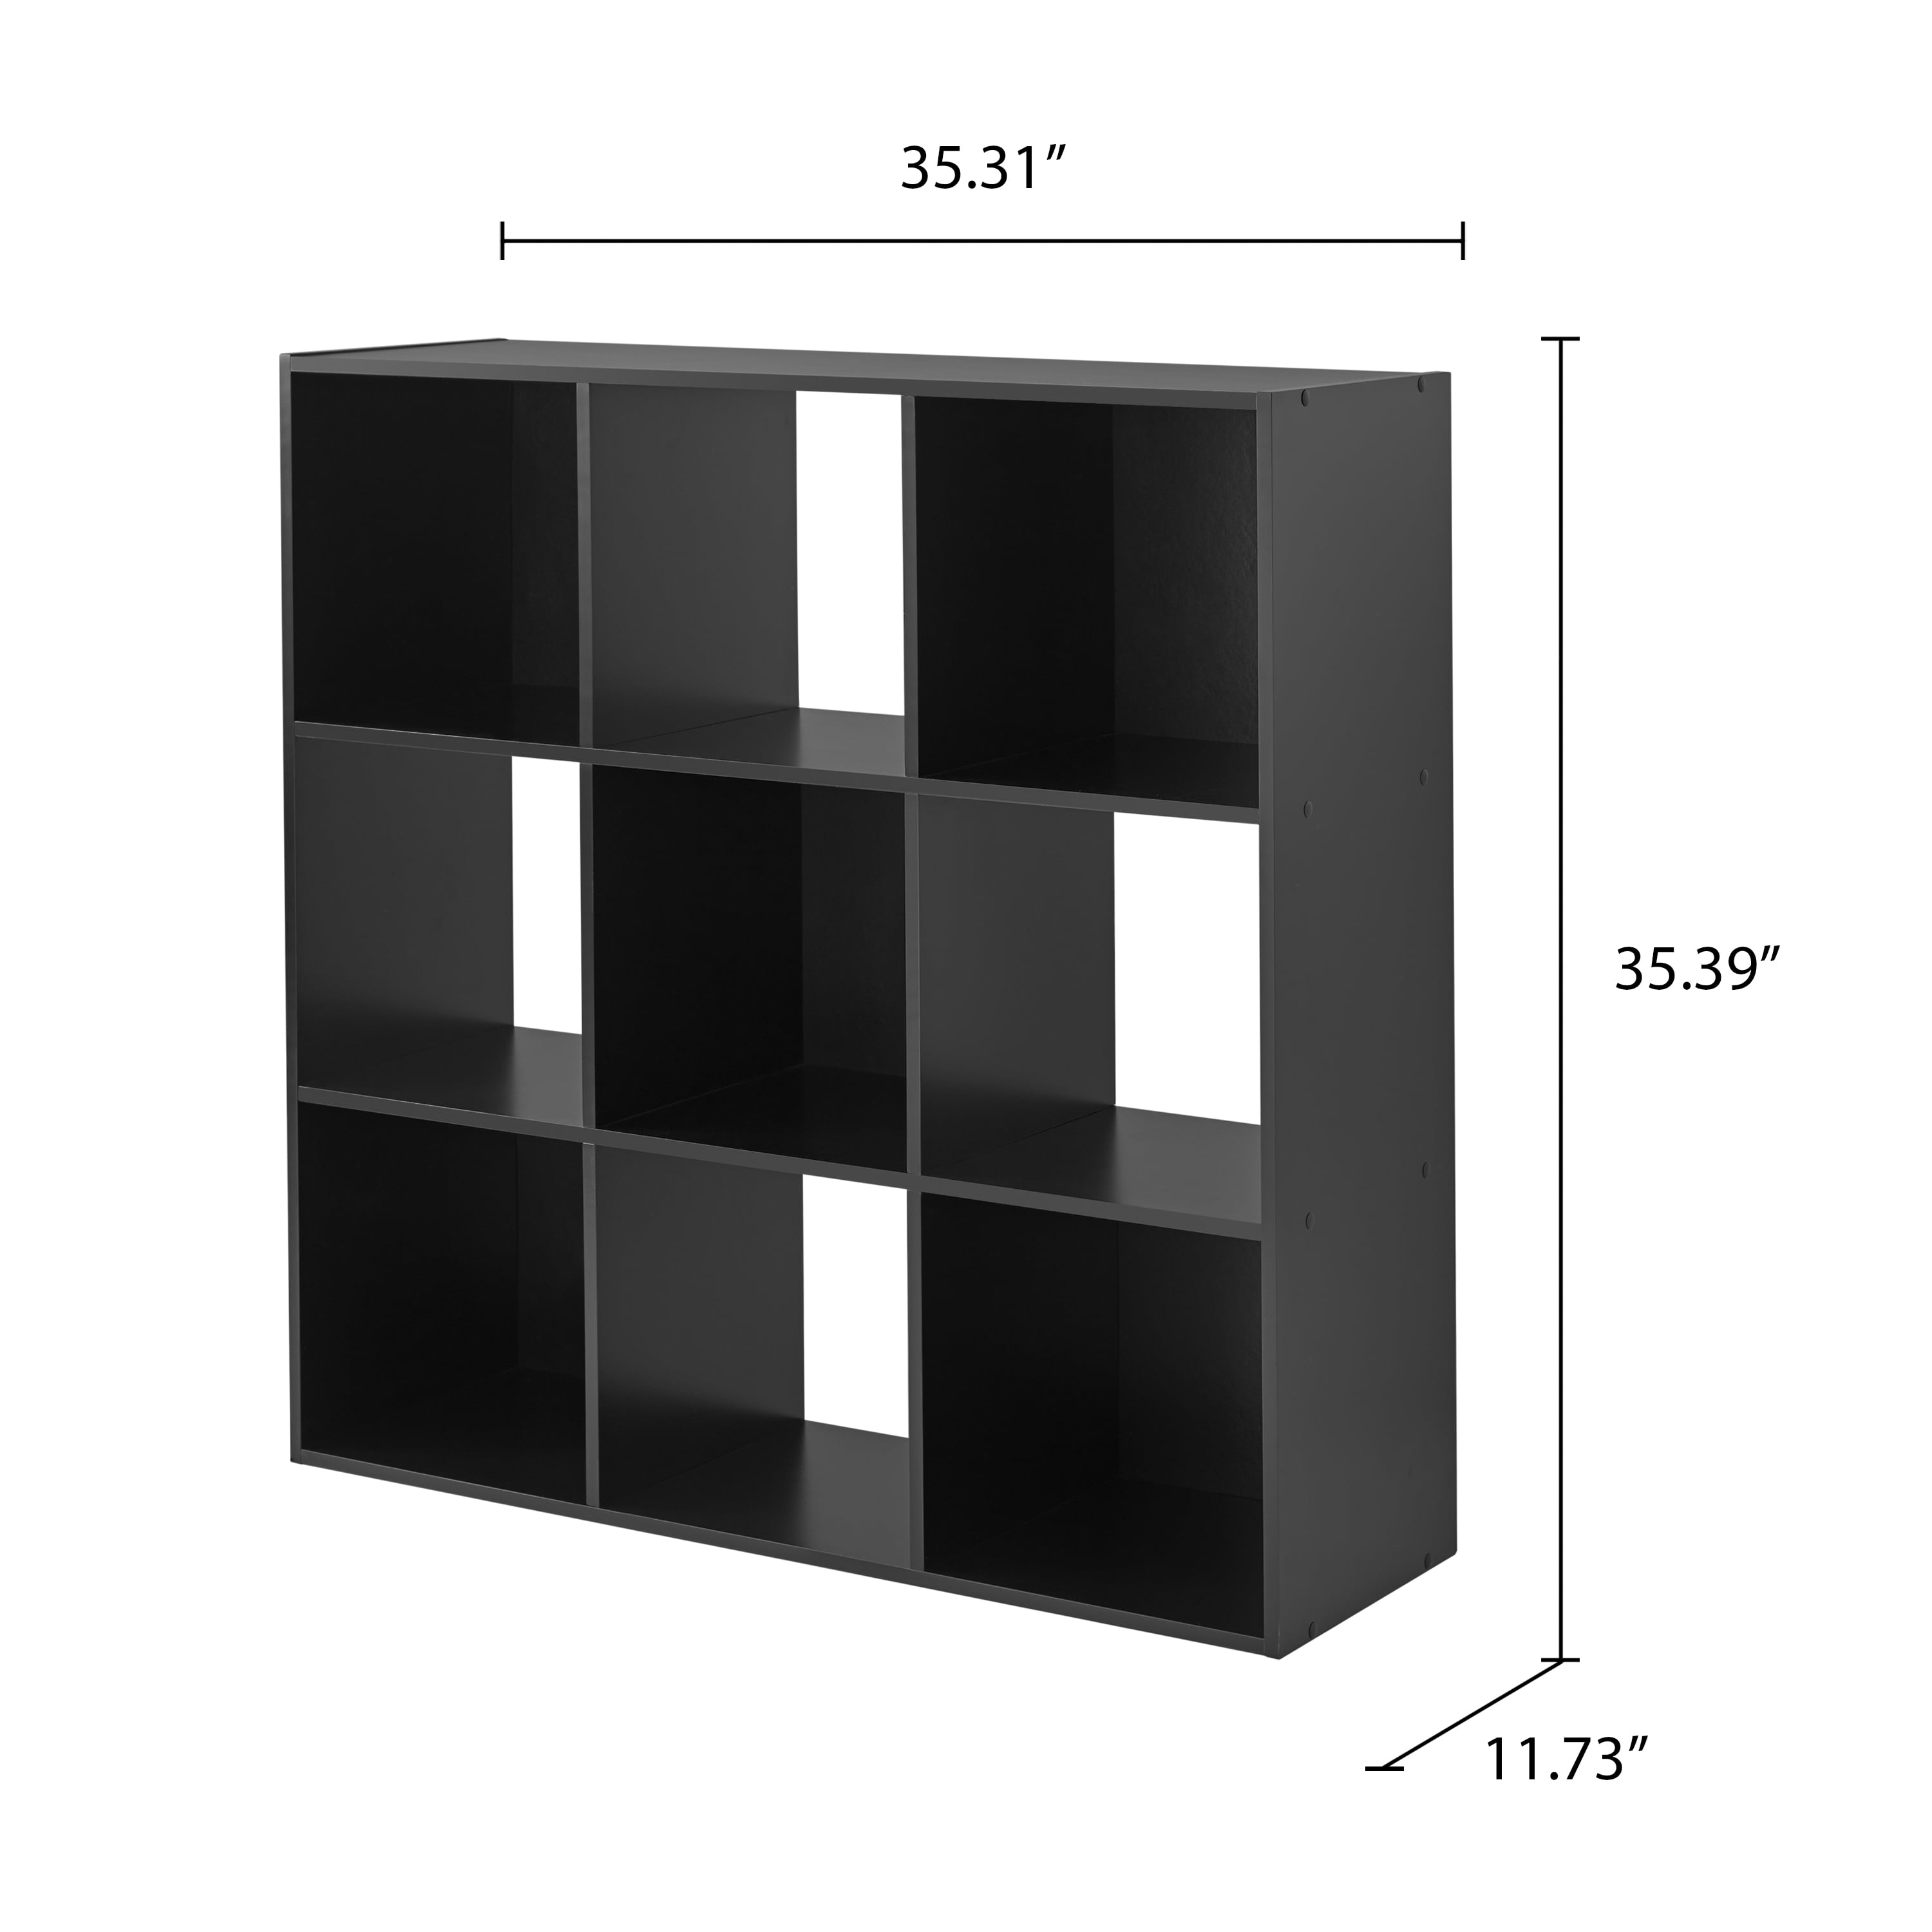 Mainstays 9-Cube Storage Organizer, Black - 3